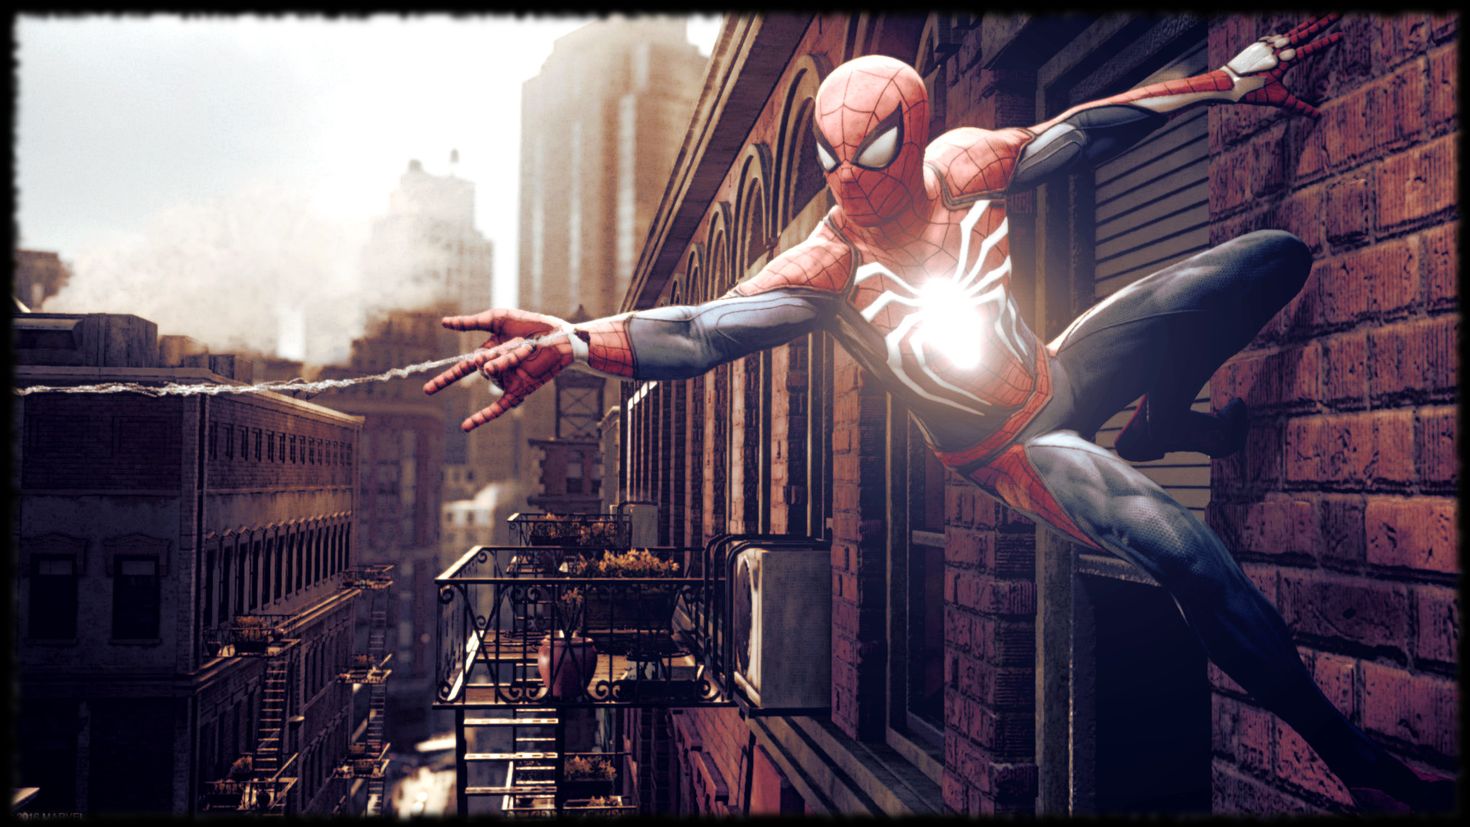 Спайдер мен пк. Spider man ps4. Spider man ps4 геймплей. Человек паук 4 игра. Спайдермен Майлз Моралес геймплей Эдисон.